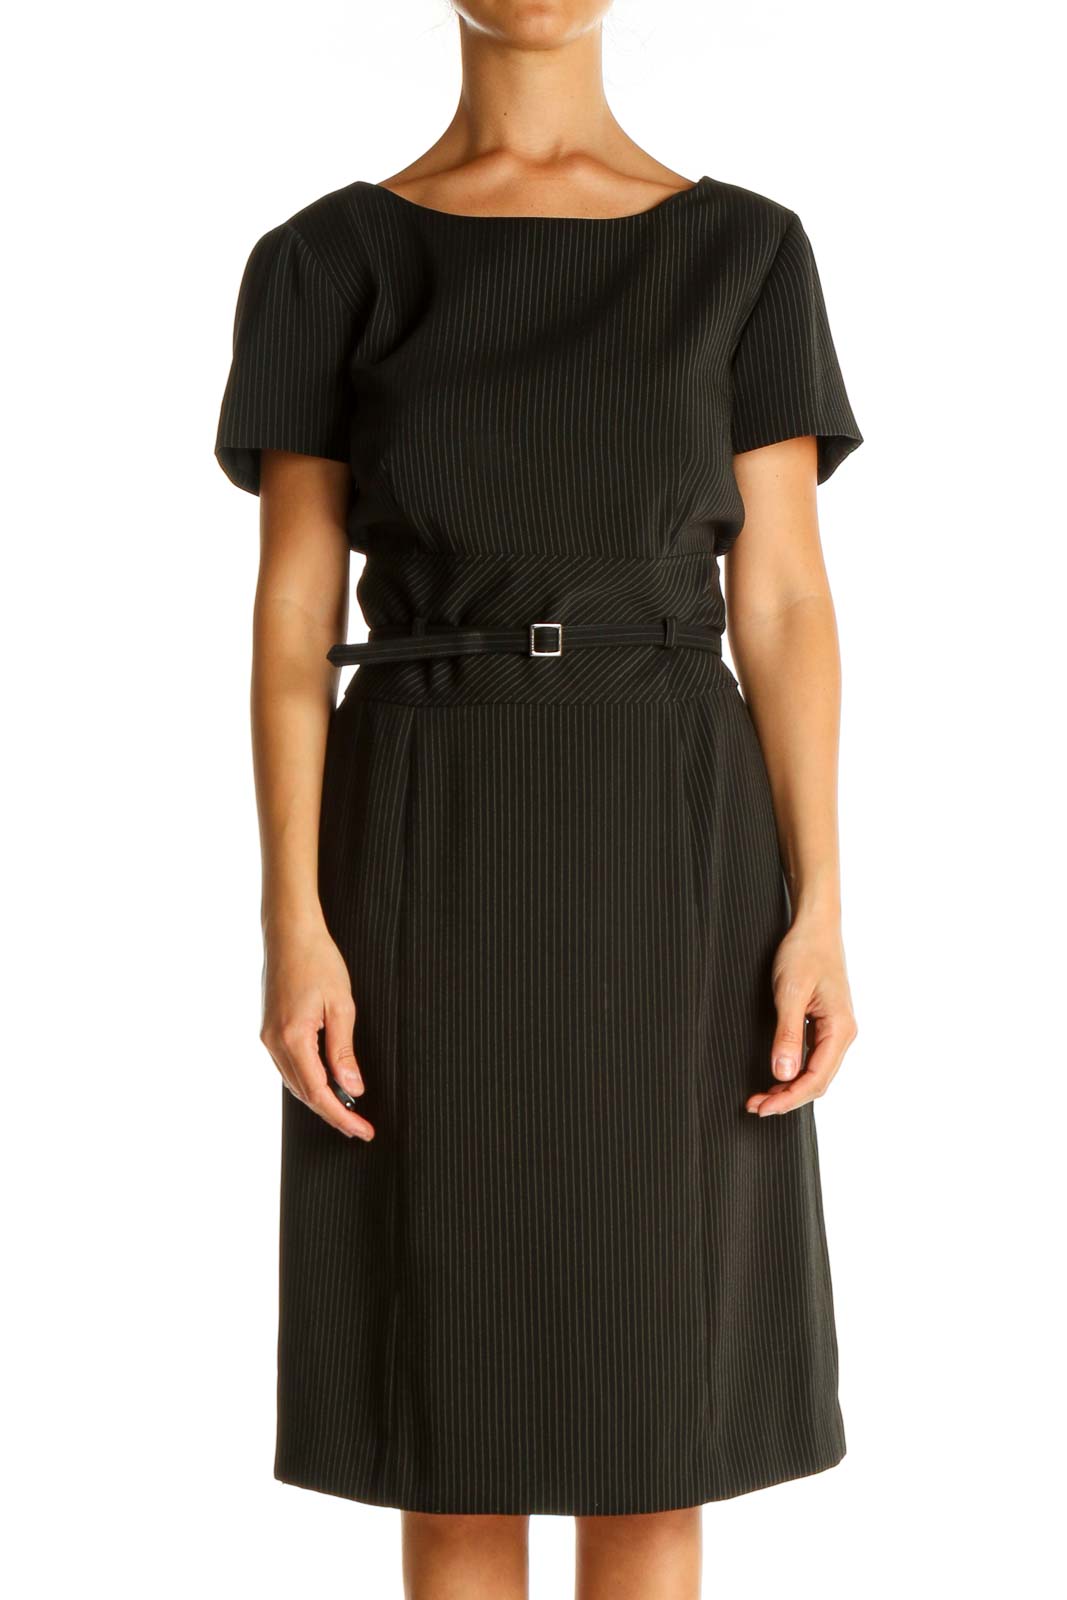 Black Pin-Striped Classic Sheath Dress Front